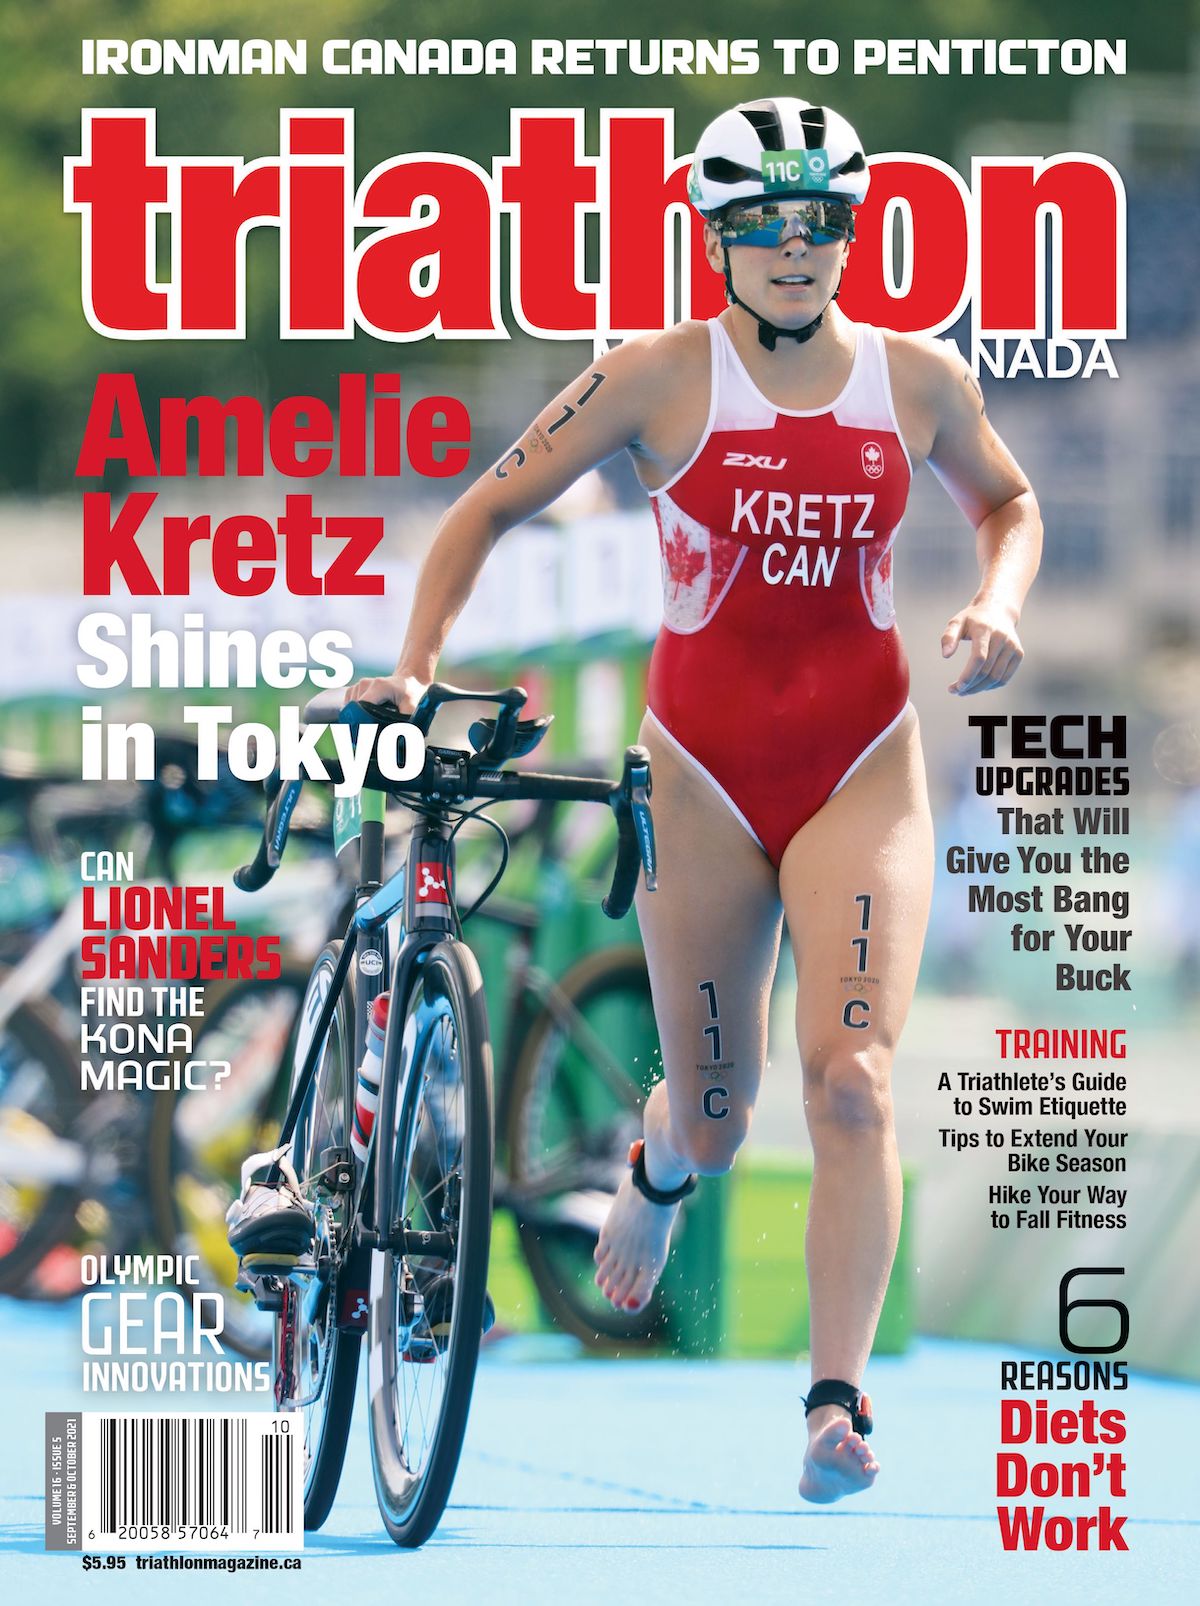 The unspoken rules of the sports bra - Triathlon Magazine Canada